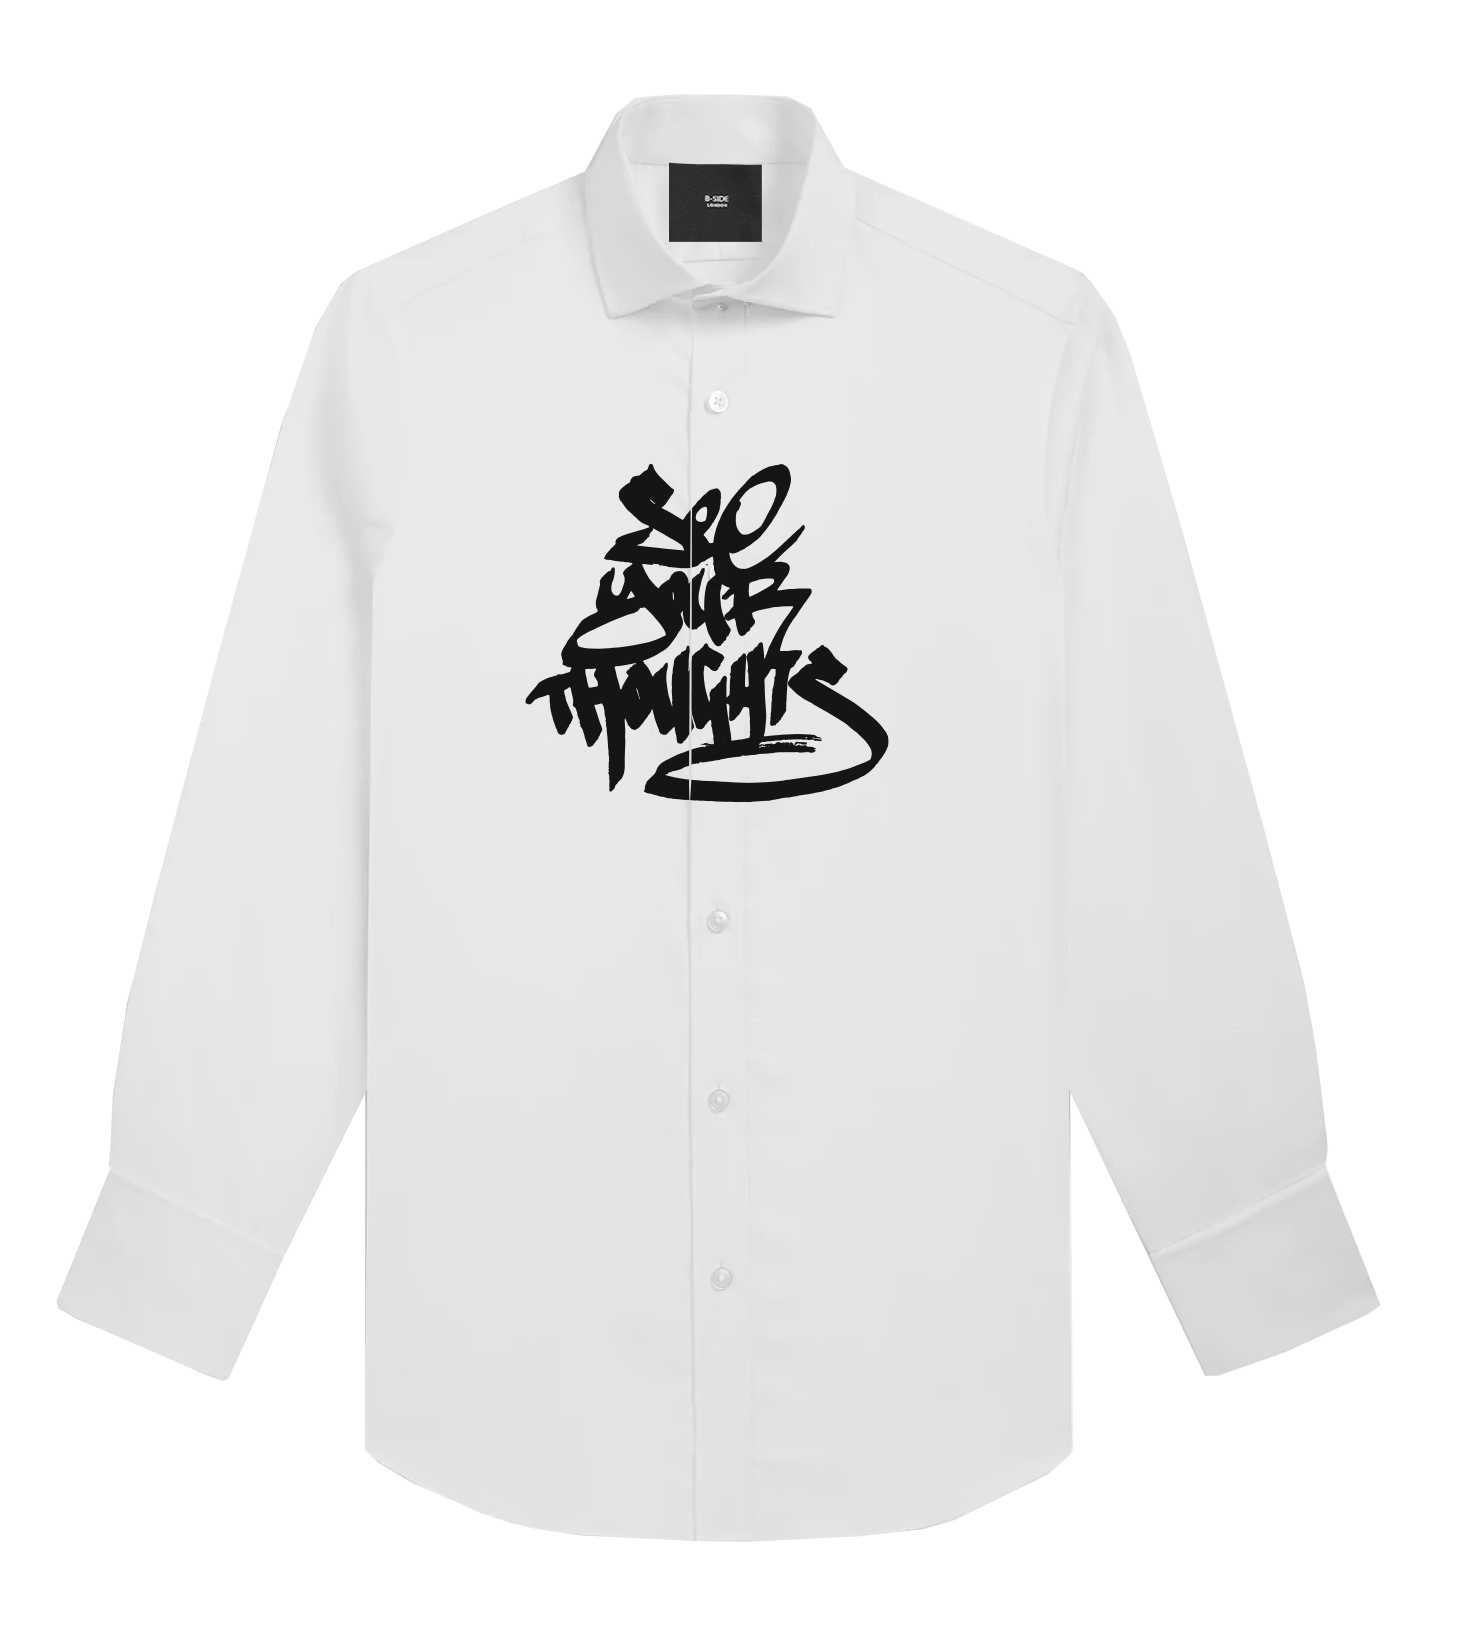 White Second Life Shirt Volume 1 - Black Print